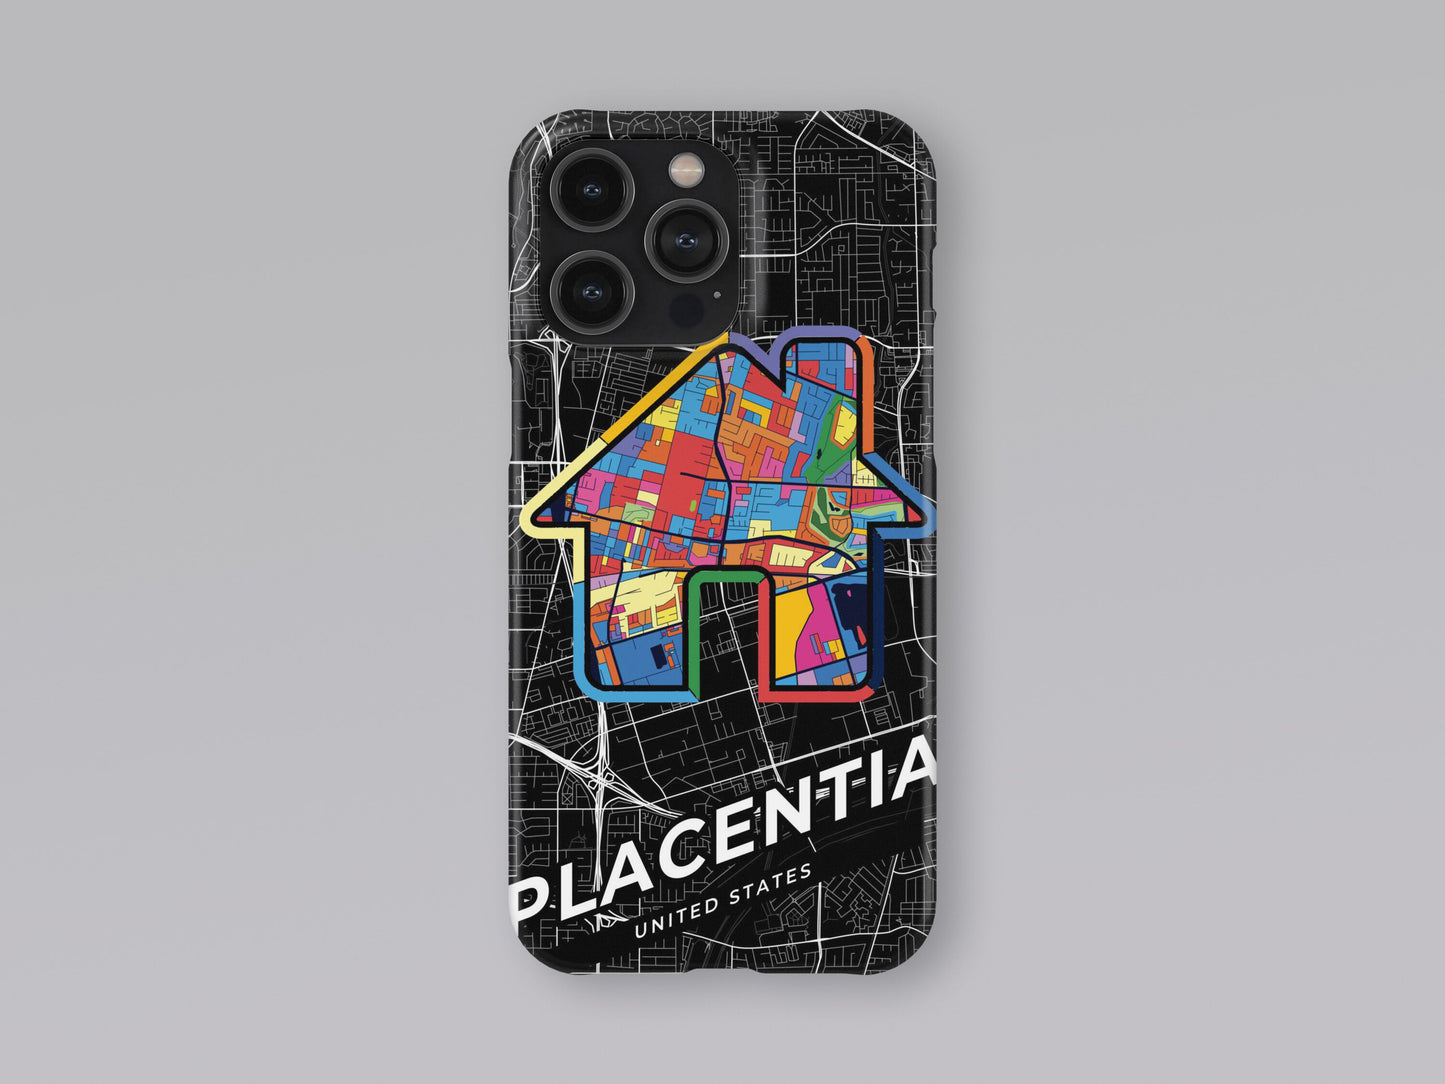 Placentia California slim phone case with colorful icon 3